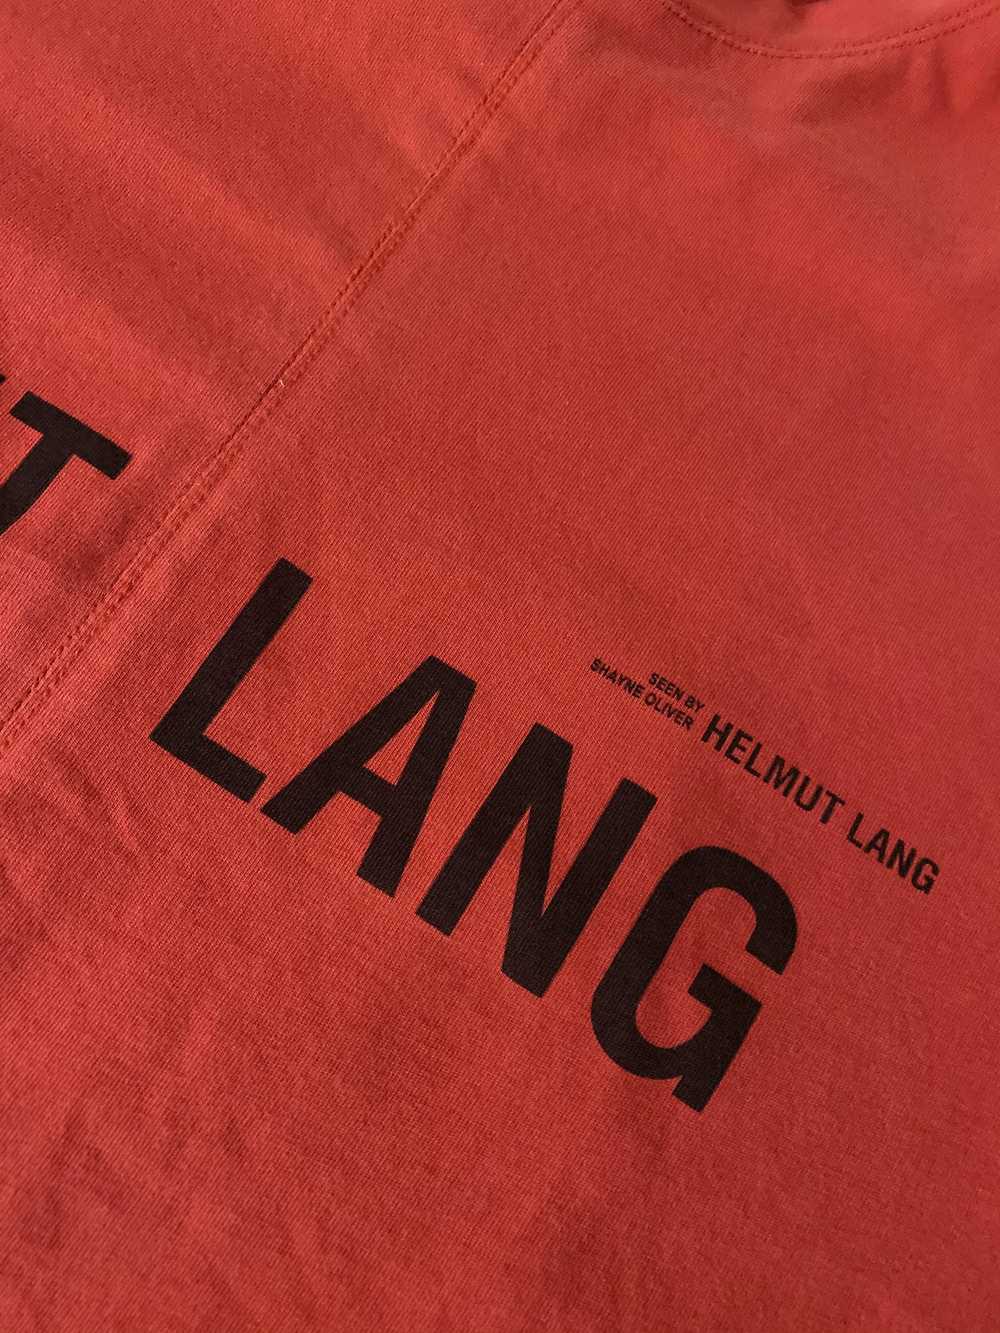 Helmut Lang Helmut Lang T-Shirt - image 4